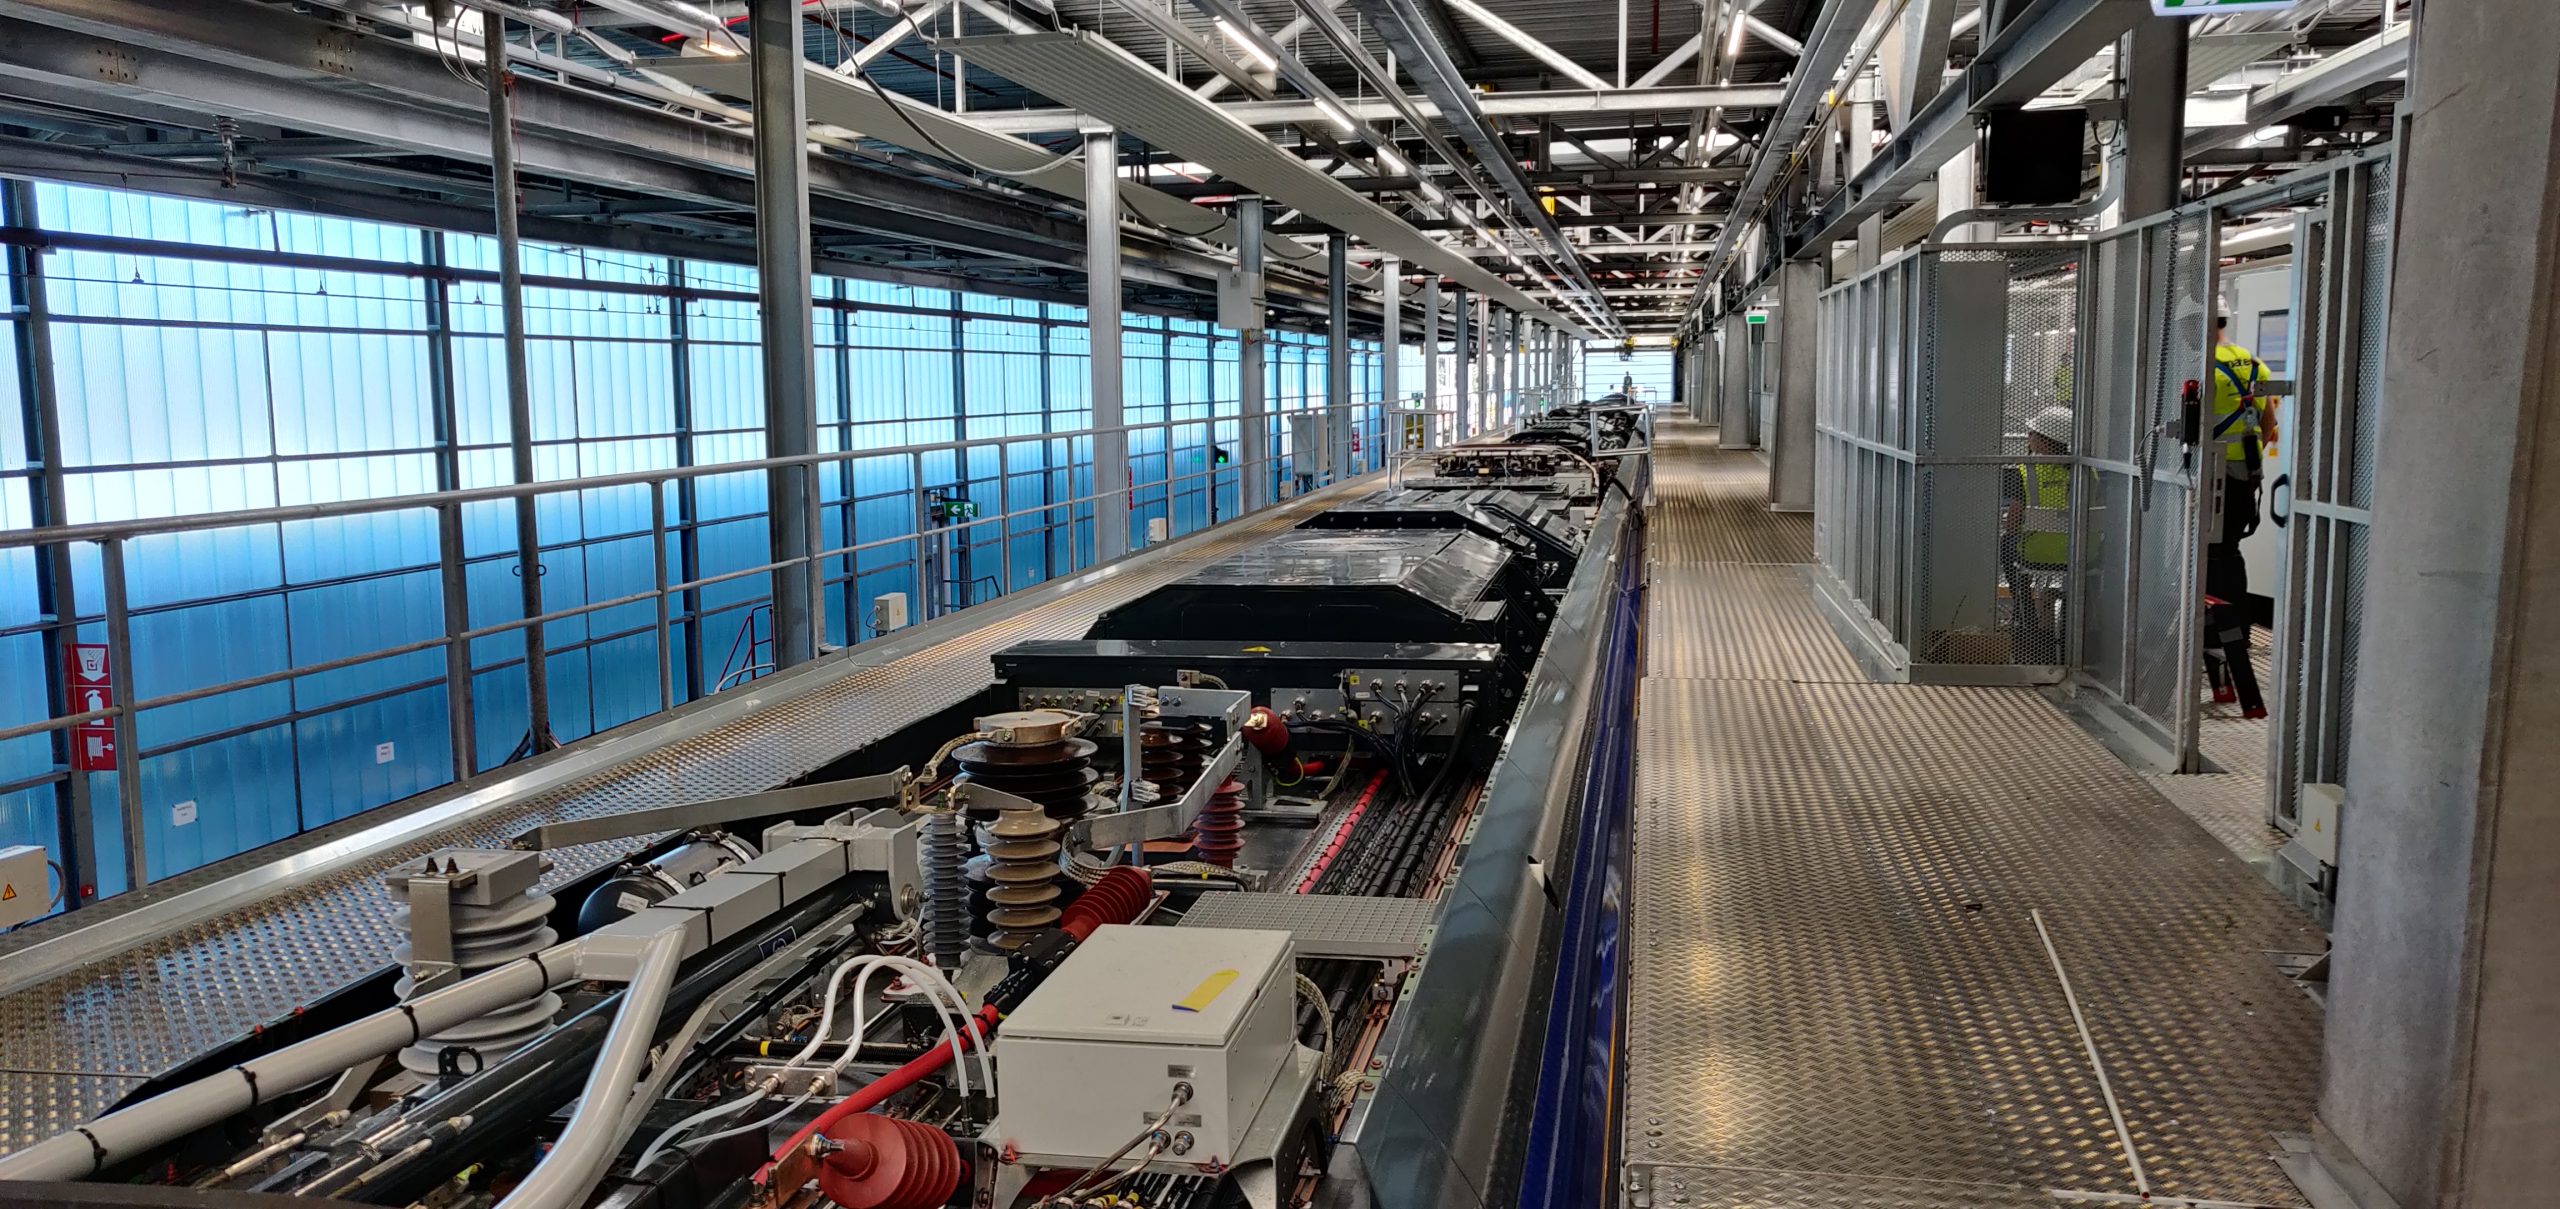 The Intercity Nieuwe Generatie in maintenance facility Watergraafsmeer in Amsterdam